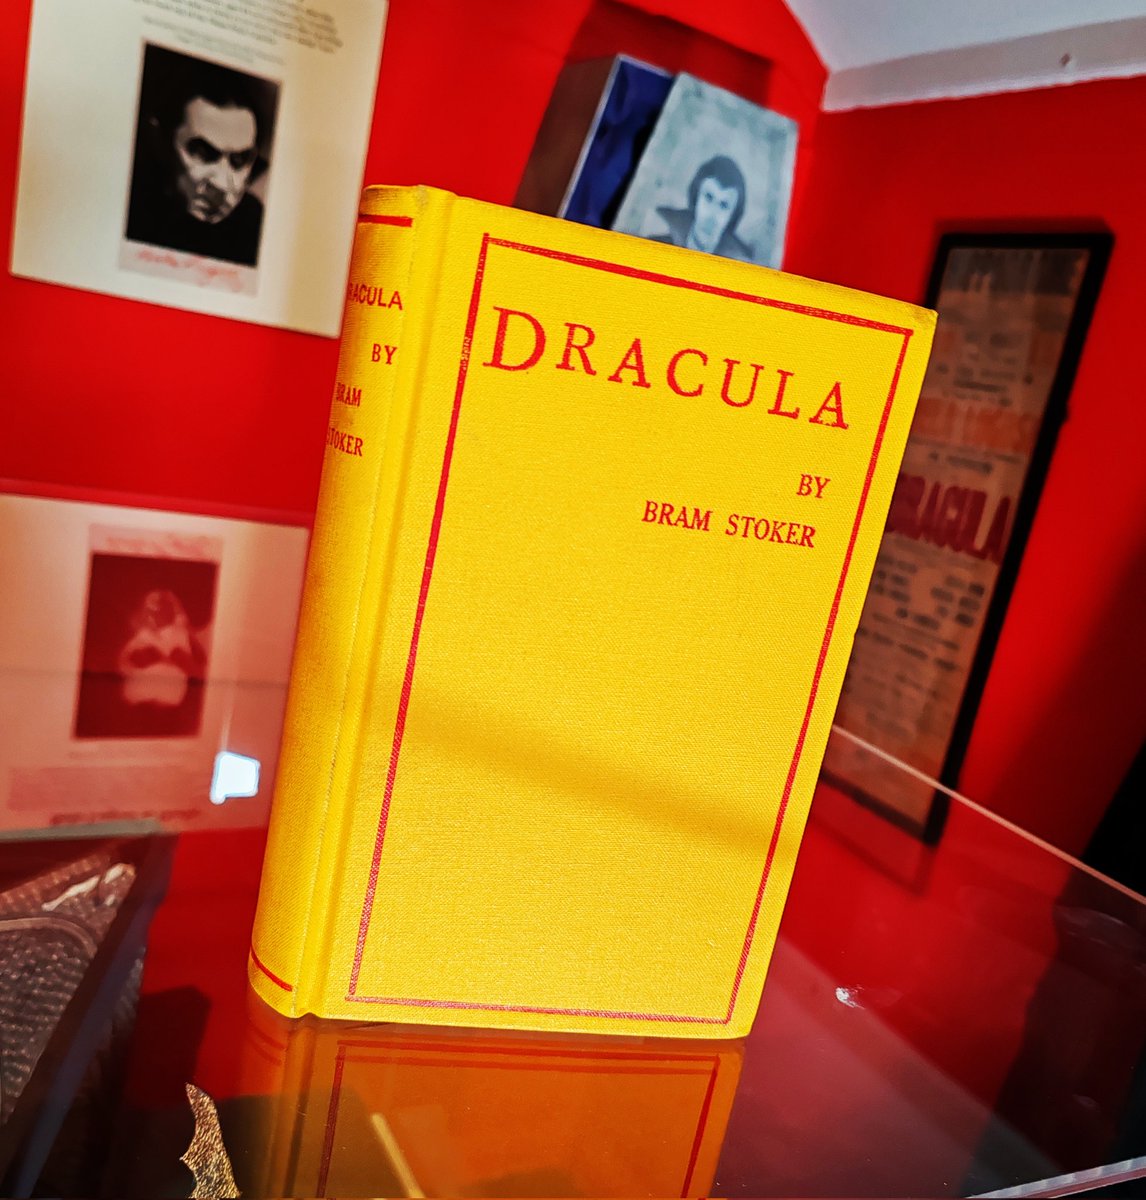 Great day taking photos for Dracula Returns To Derby at @derbymuseums 

#dracula #DraculaReturnstoDerby #bramstokersdracula #bramstoker #derby